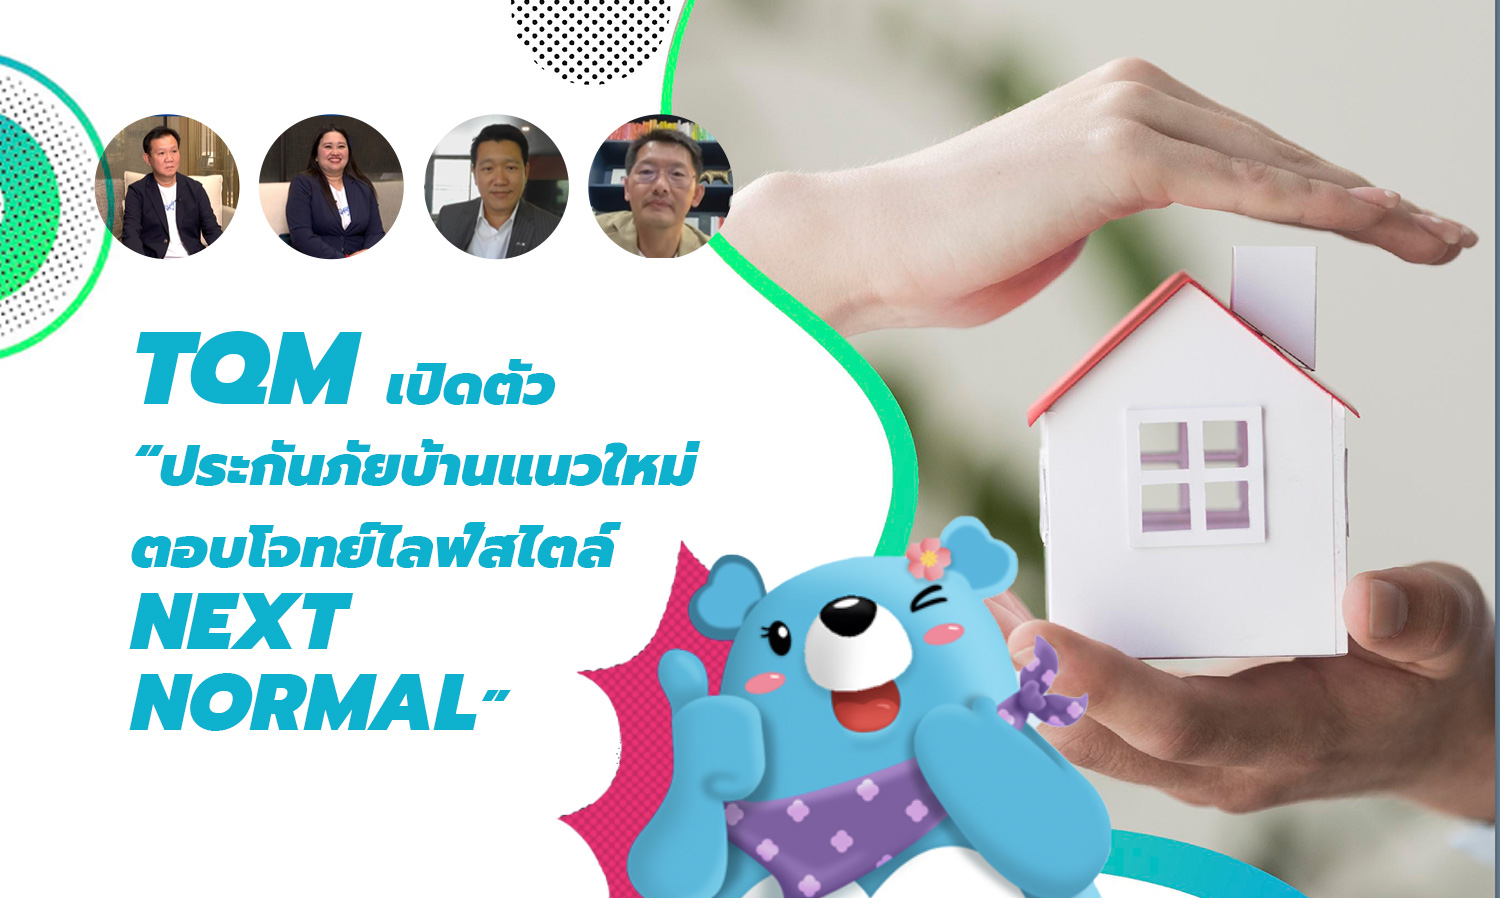 tqm-เปิดตัว-tqm-home-insurance-ประกันบ้านแนวใหม่-พร้อมแพลตฟอร์มประเมินความเสี่ยงบ้านครั้งแรกของไทย